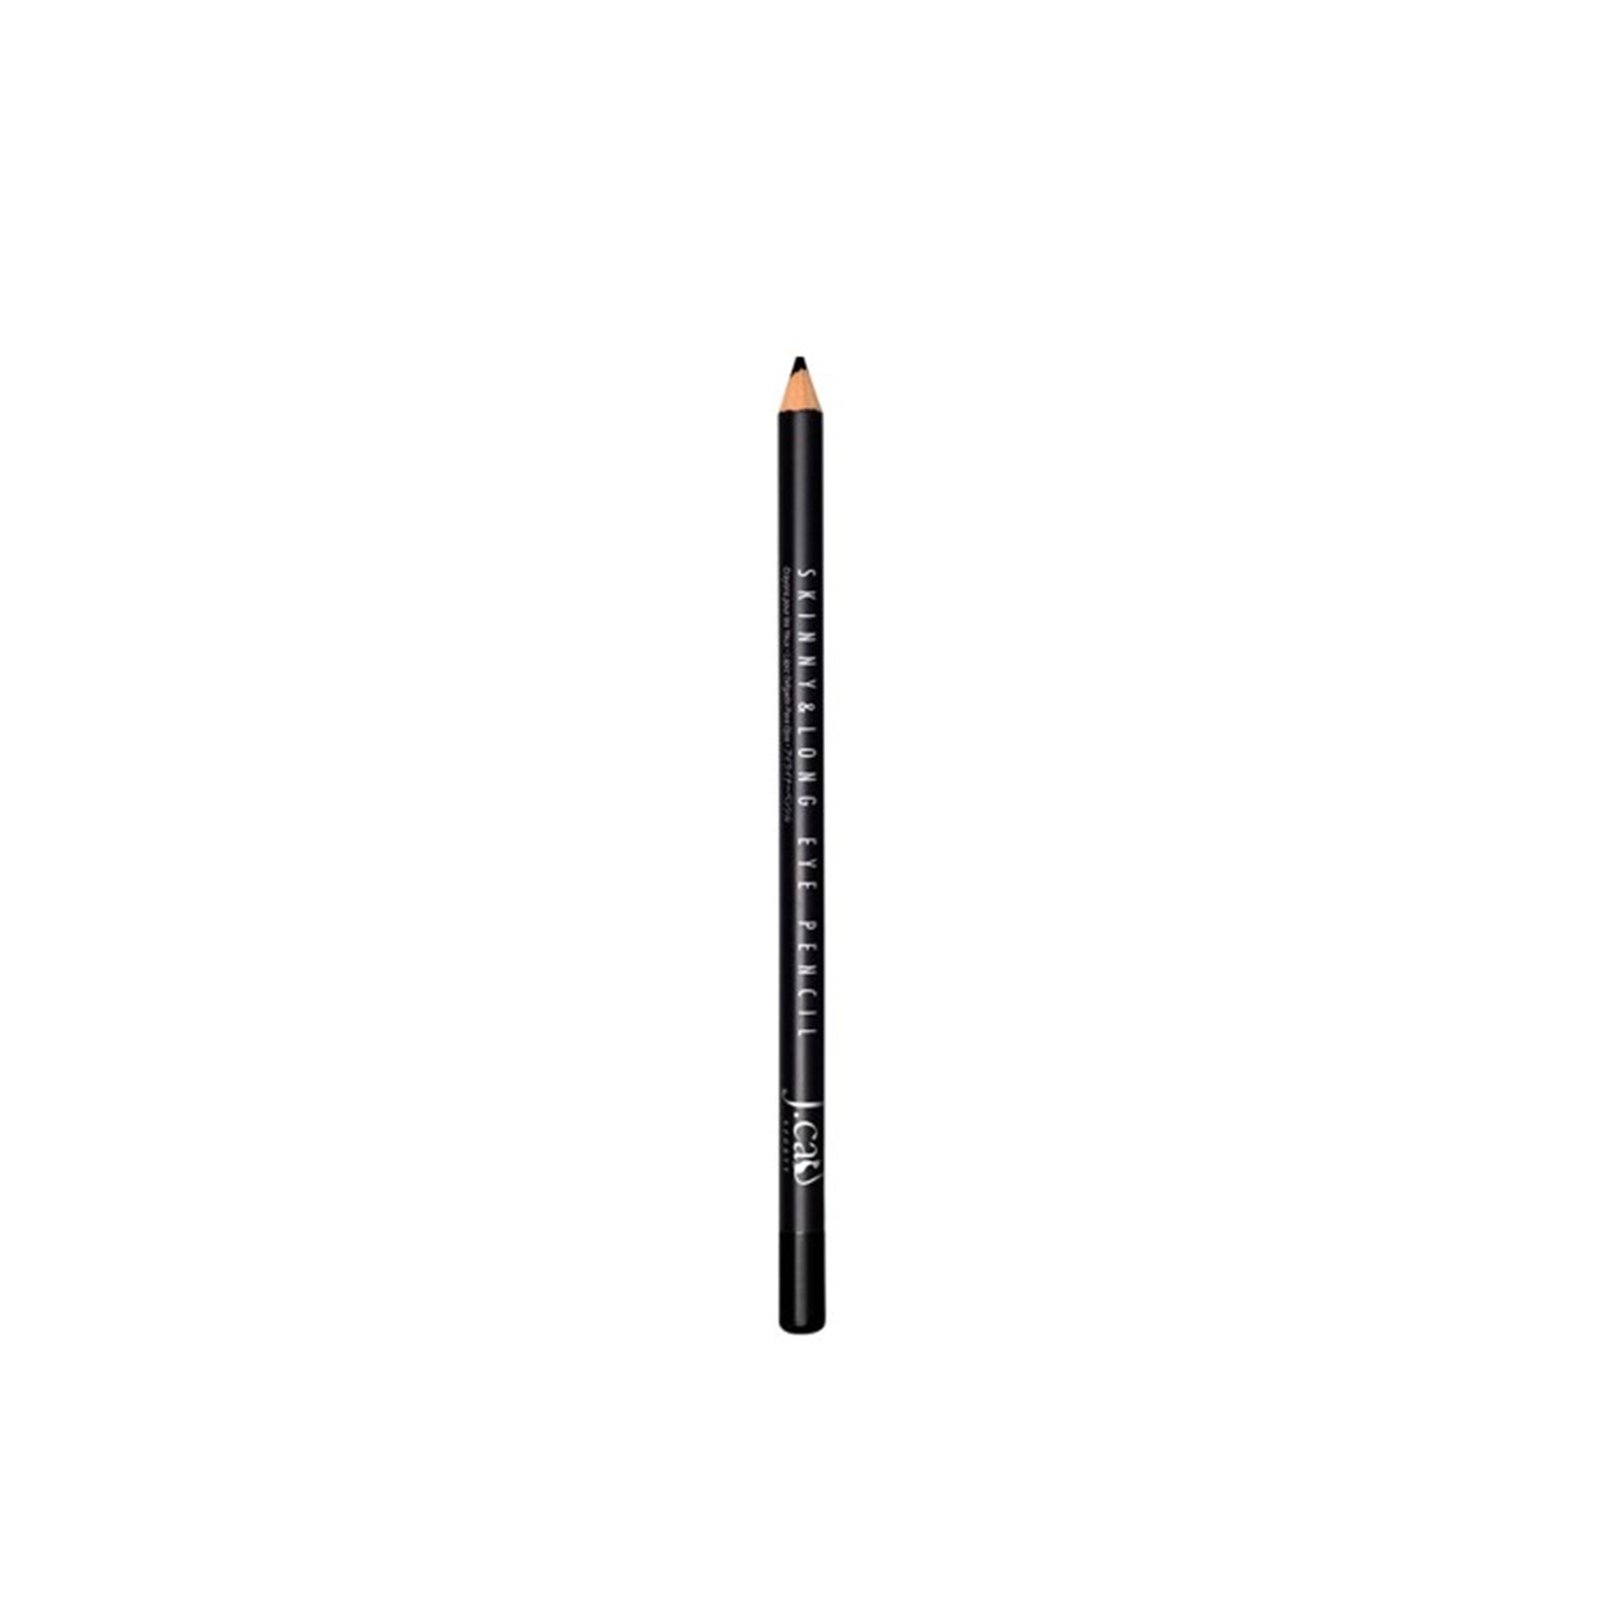 J.Cat Skinny & Long Eye Pencil 102 Bulk Black 2g (0.08 oz)